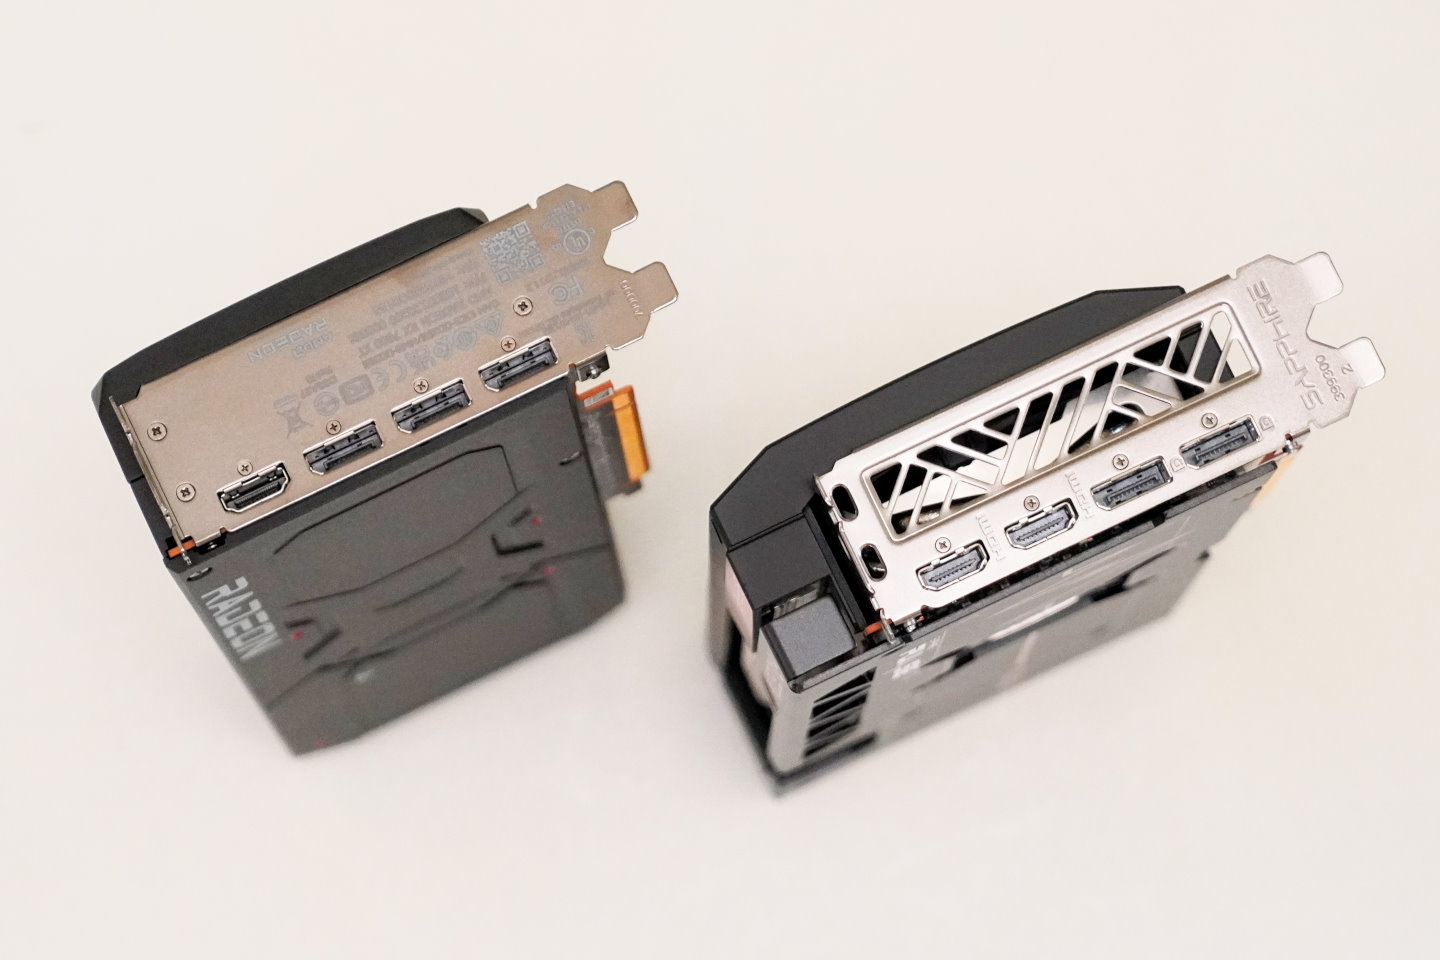 Radeon RX 7800 XT公板卡提供1組HDMI、3組DisplayPort影音輸出端，而Sapphire Pulse Radeon RX 7700 XT則是HDMI、DisplayPort各2組。